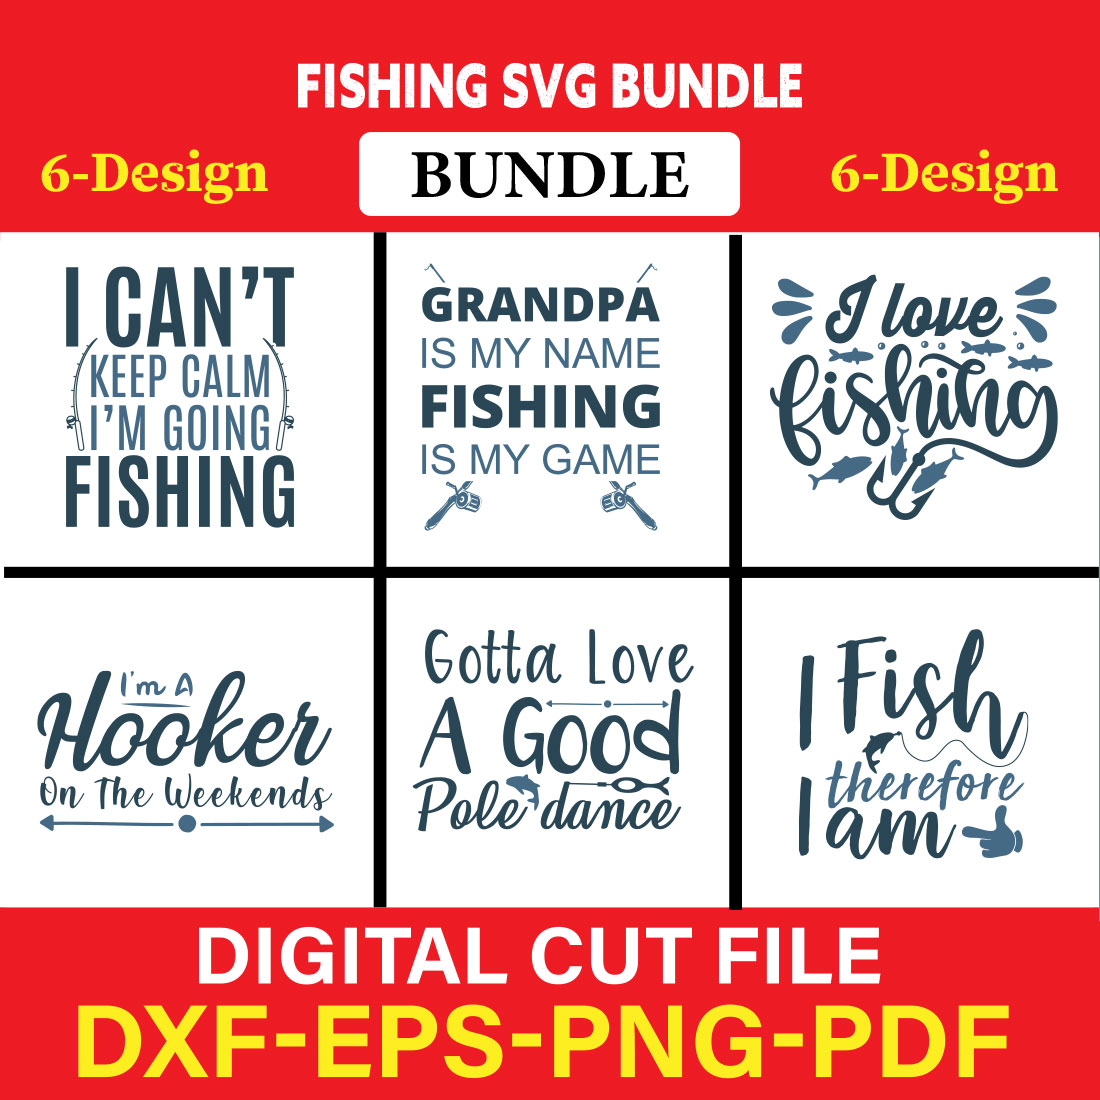 Fishing T-shirt Design Bundle Vol-3 cover image.